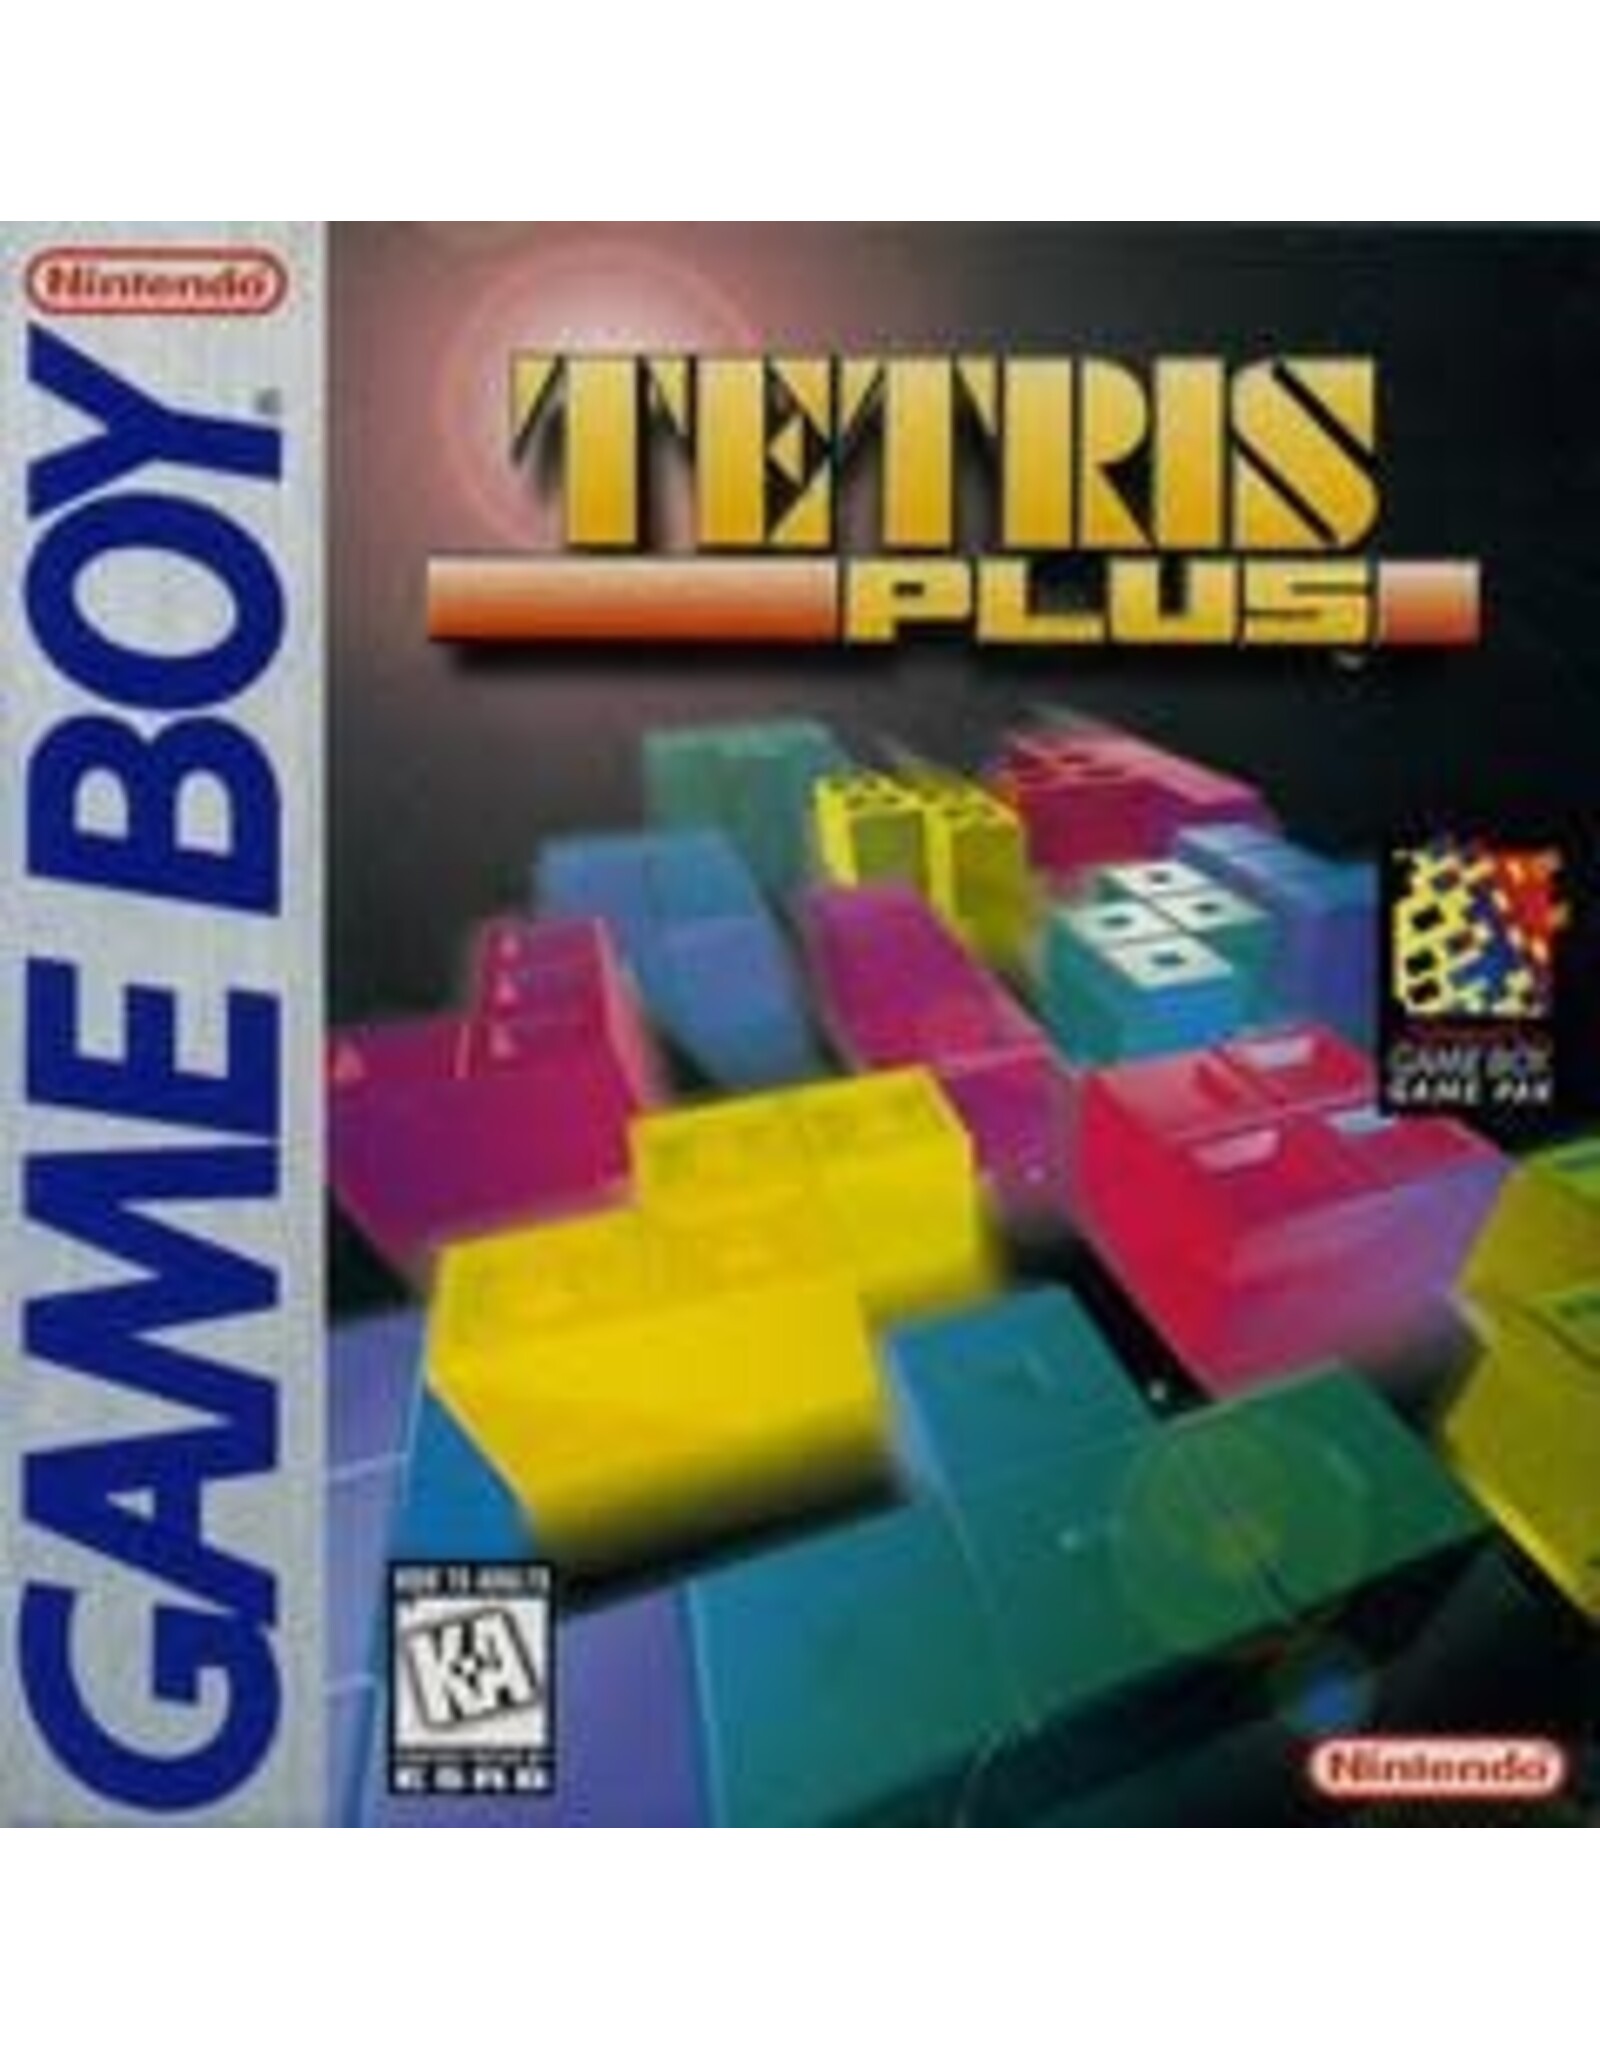 Game Boy Tetris Plus (CiB)